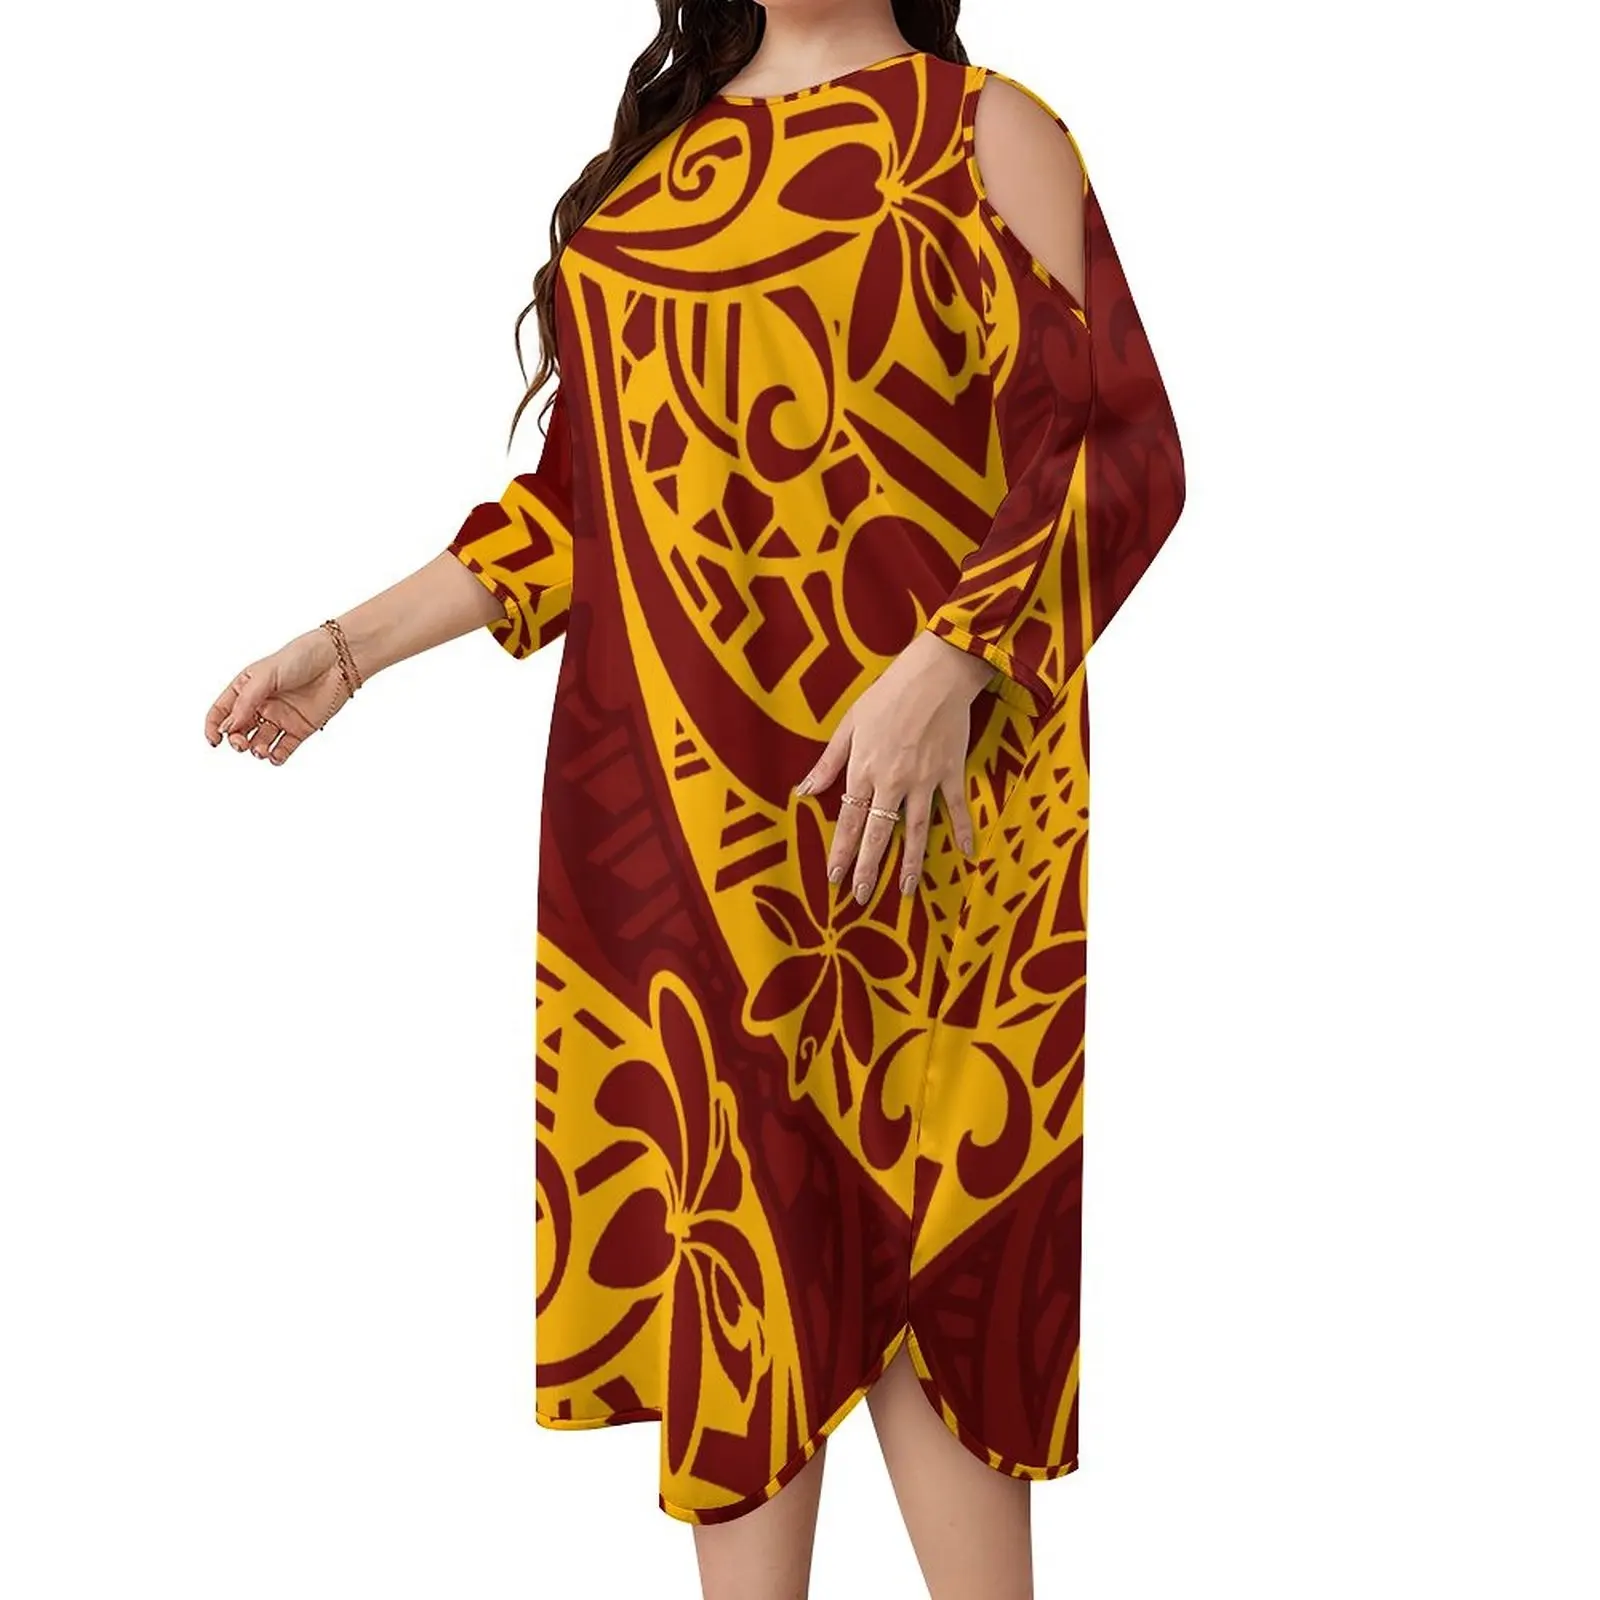 custom on demand plus size polynesian dresses women fall casual clothing red gold Tiare floral print samoan design tribal dress